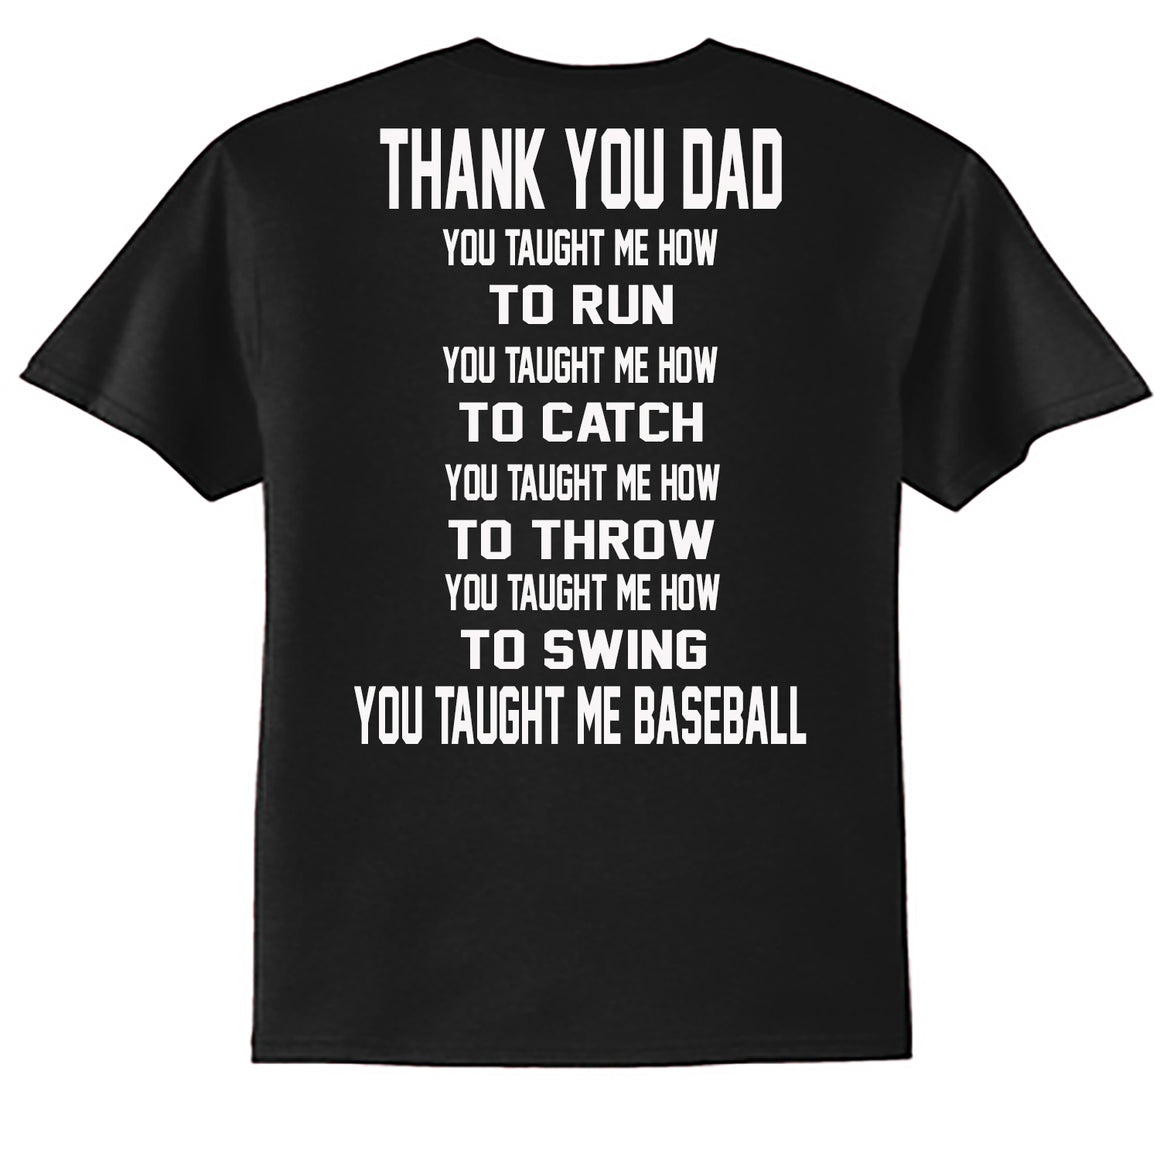 Dad Taught Me Baseball